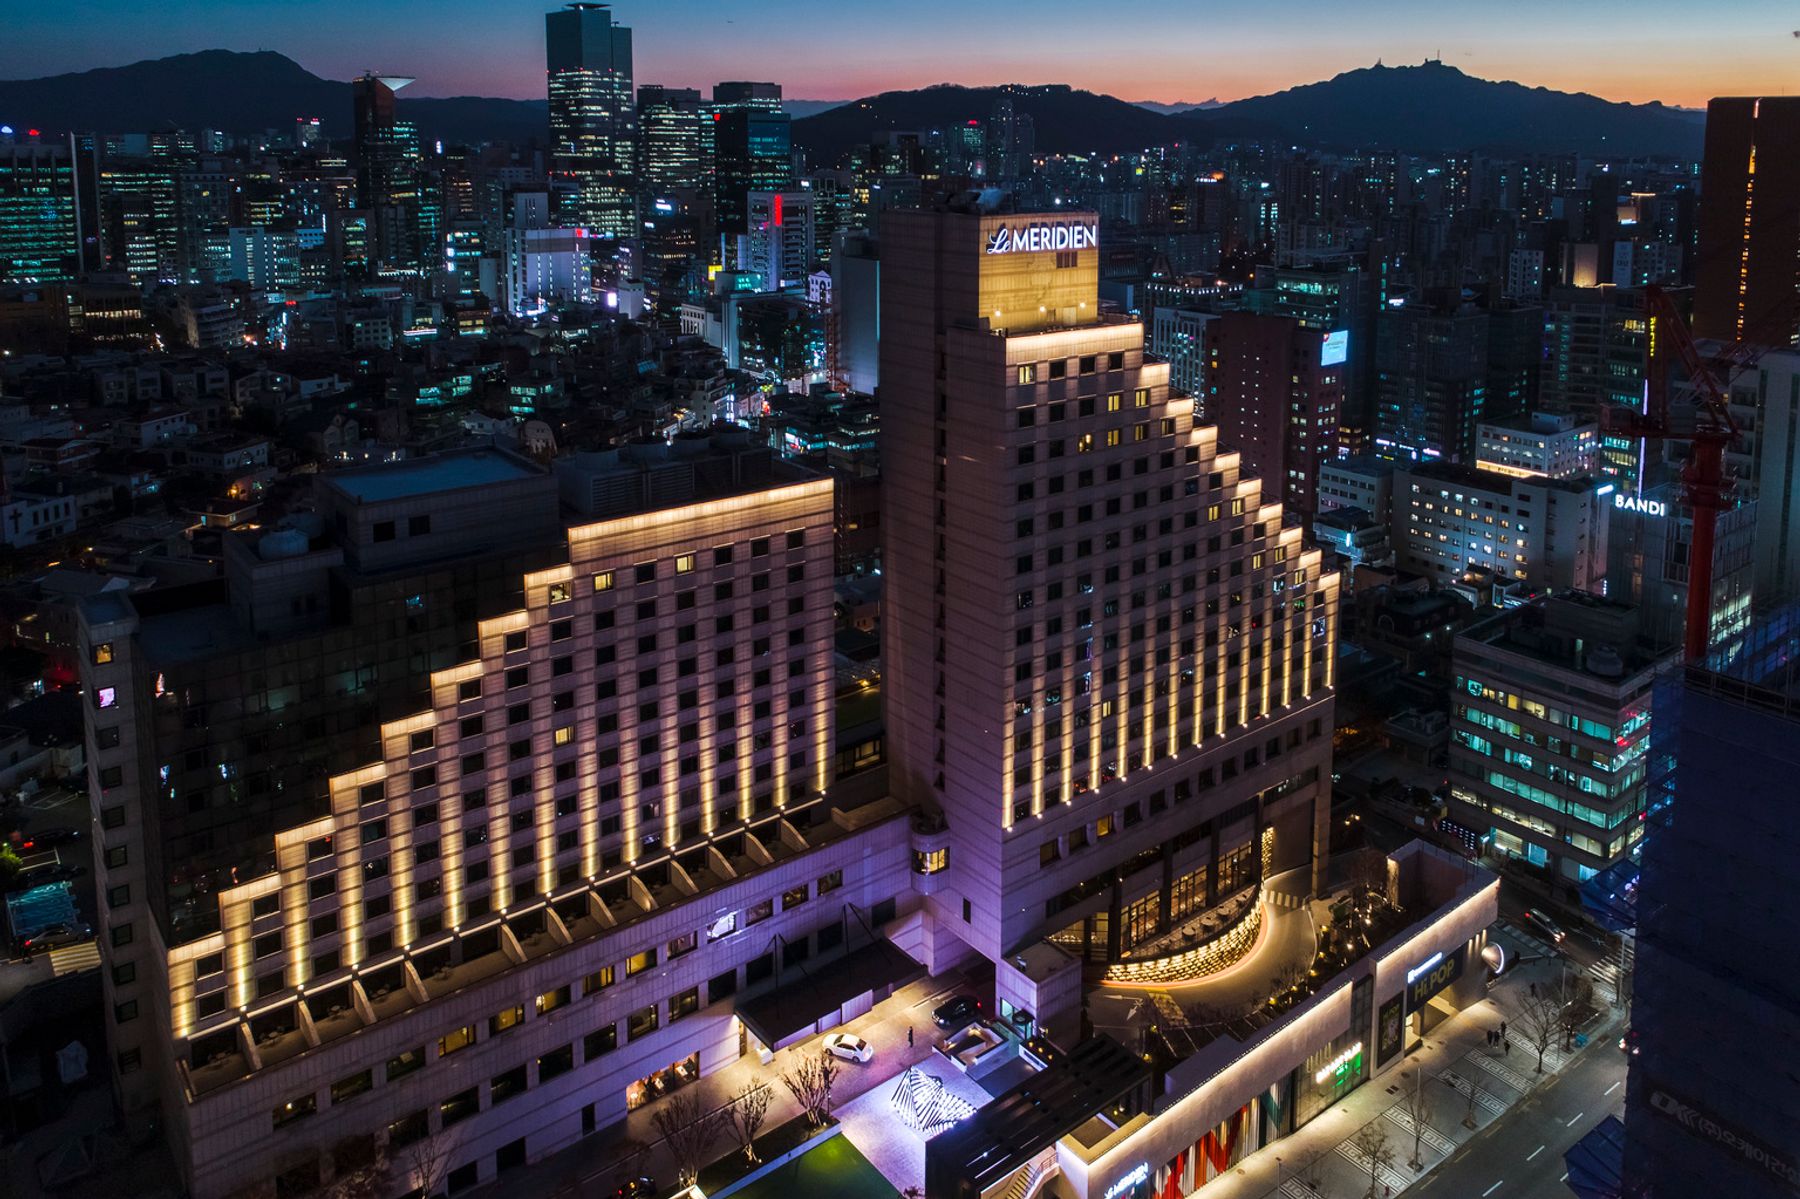 Hotel Le Meridien, Seoul. Innenarchitektur: David Collins Studio, London. Lichtplanung: Eon SLD, Seoul. Fotografie: Jackie Chan, Sydney.